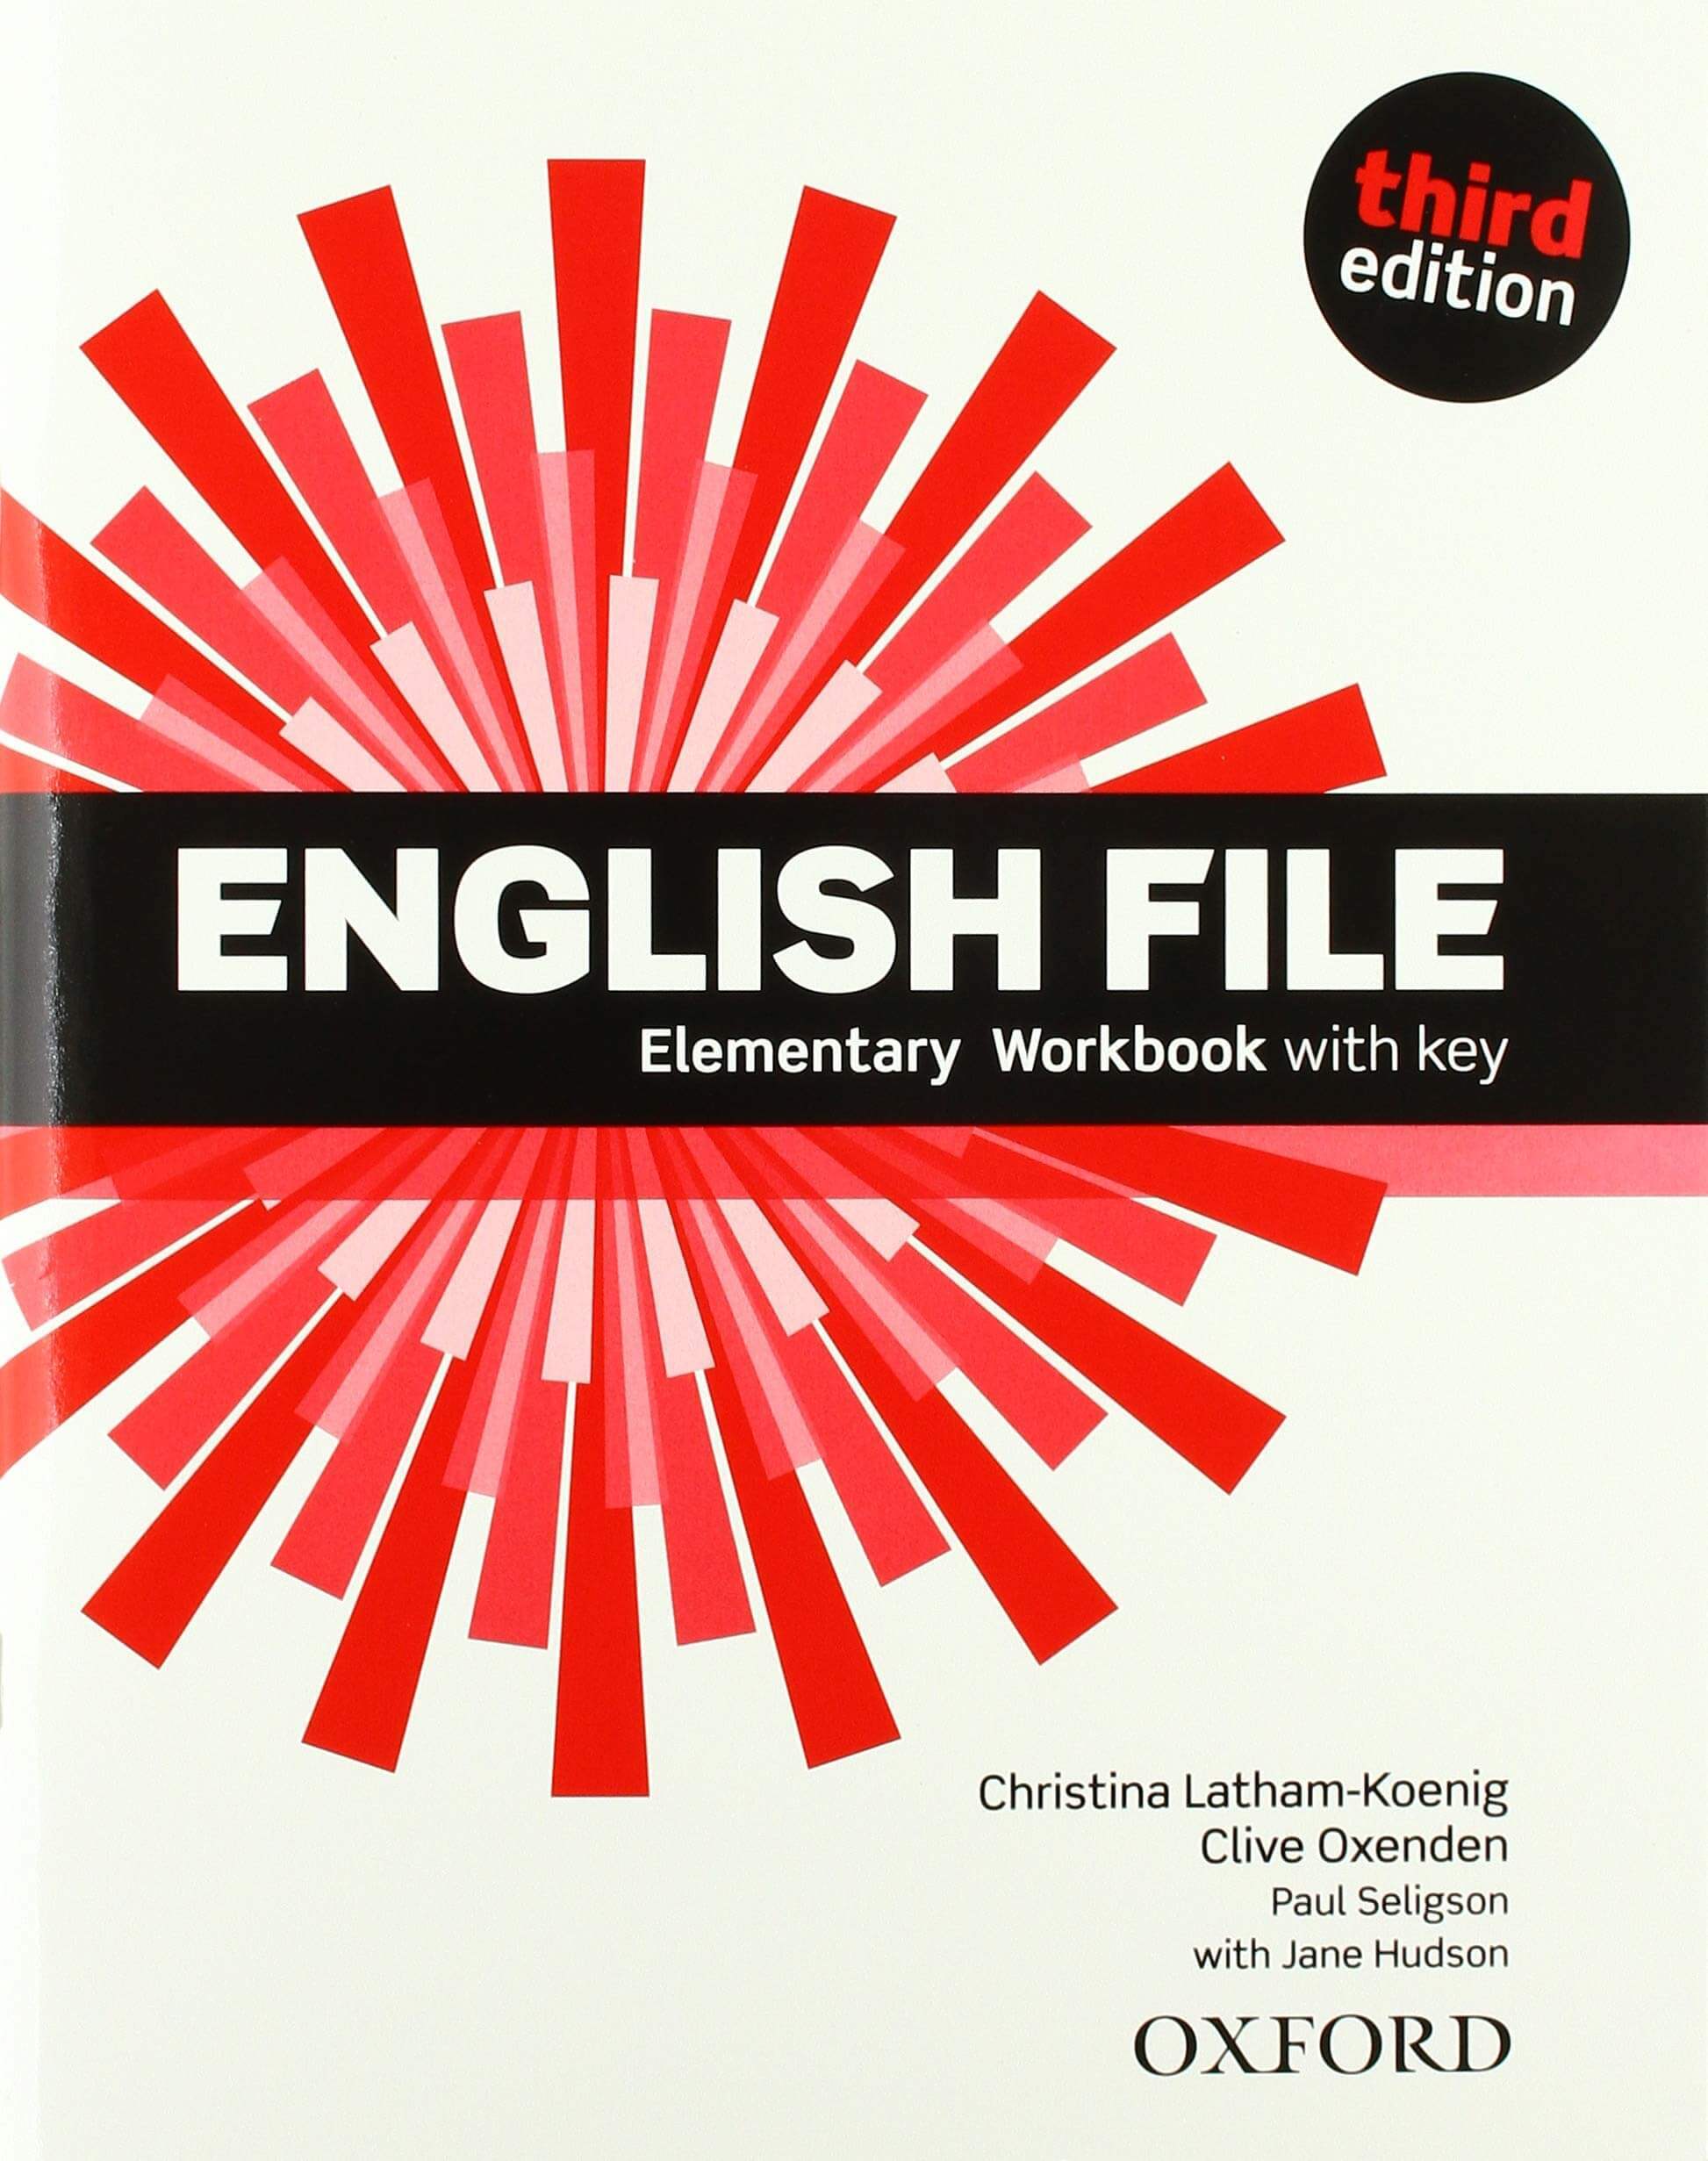 English file 3rd edition workbook. English file Elementary 3rd Edition. Английский Оксфорд учебник English file. Инглиш файл элементари 3 издание. New English file Elementary третье издание.